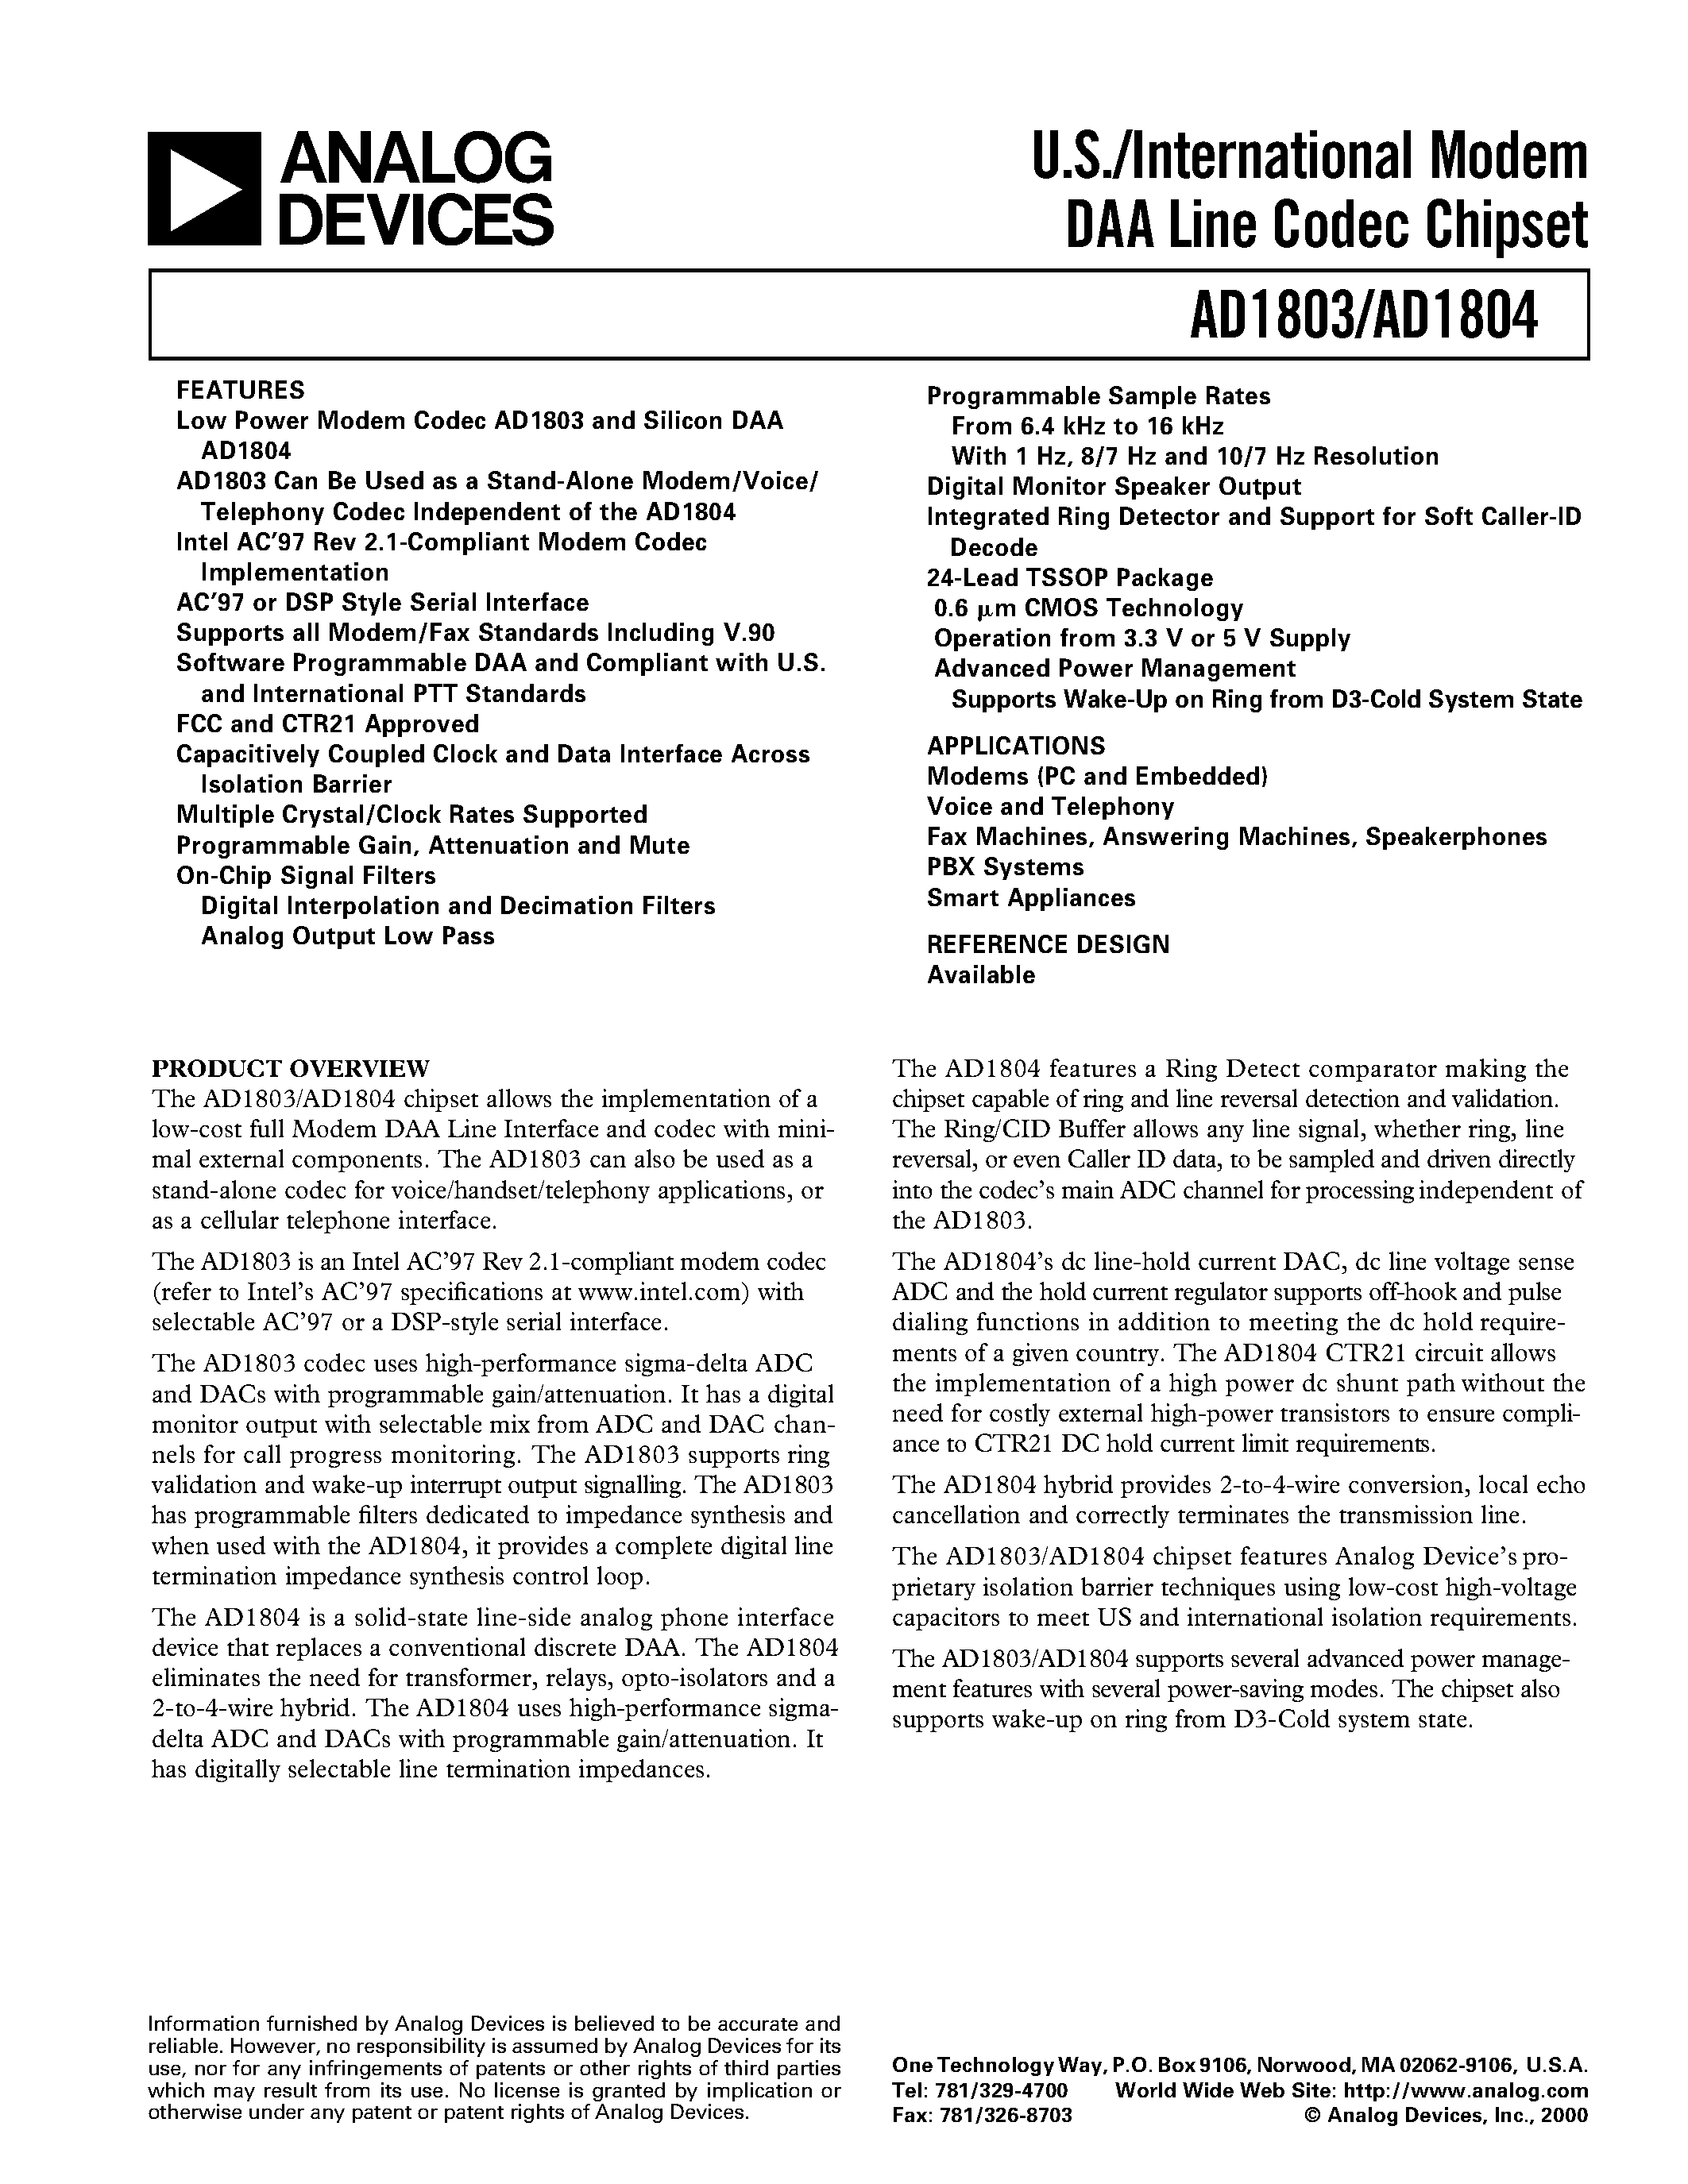 Datasheet AD1804 - U.S./International Modem DAA Line Codec Chipset page 1